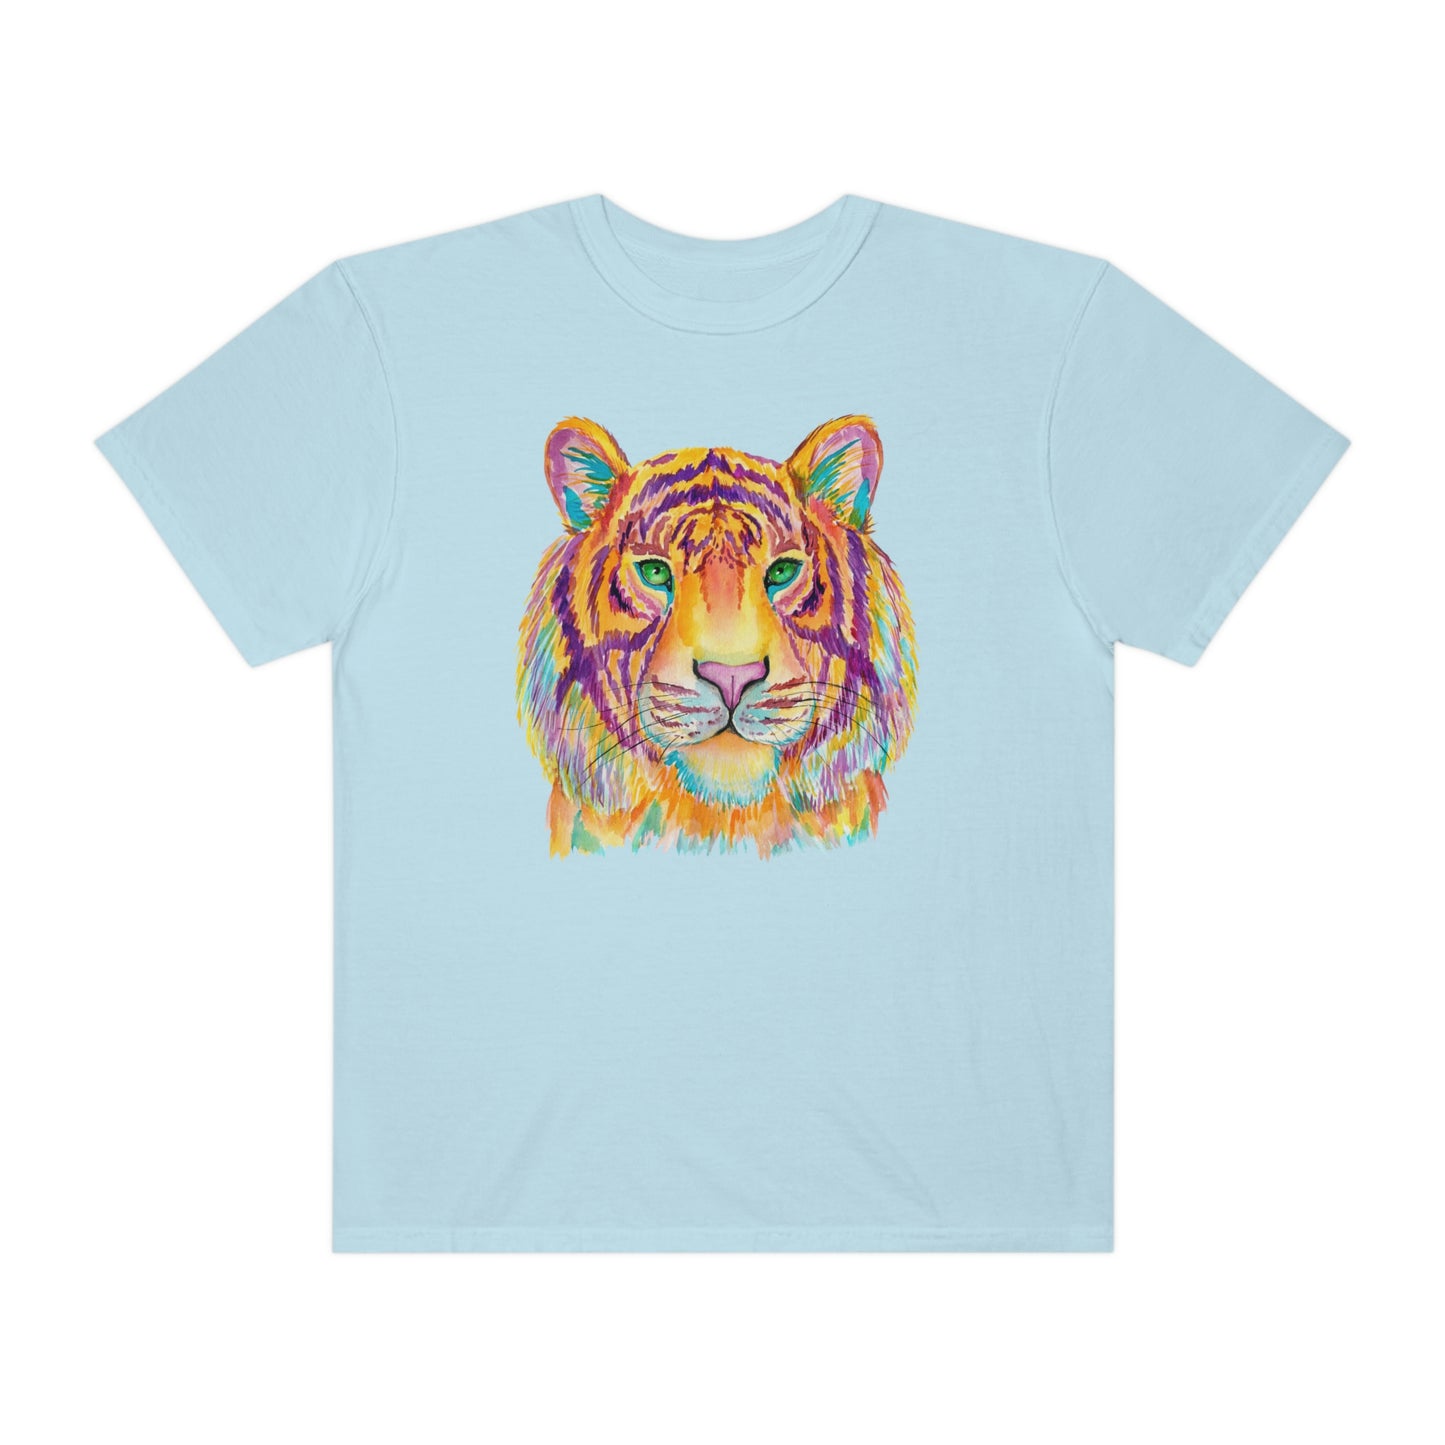 Tiger Face Game Day Shirt